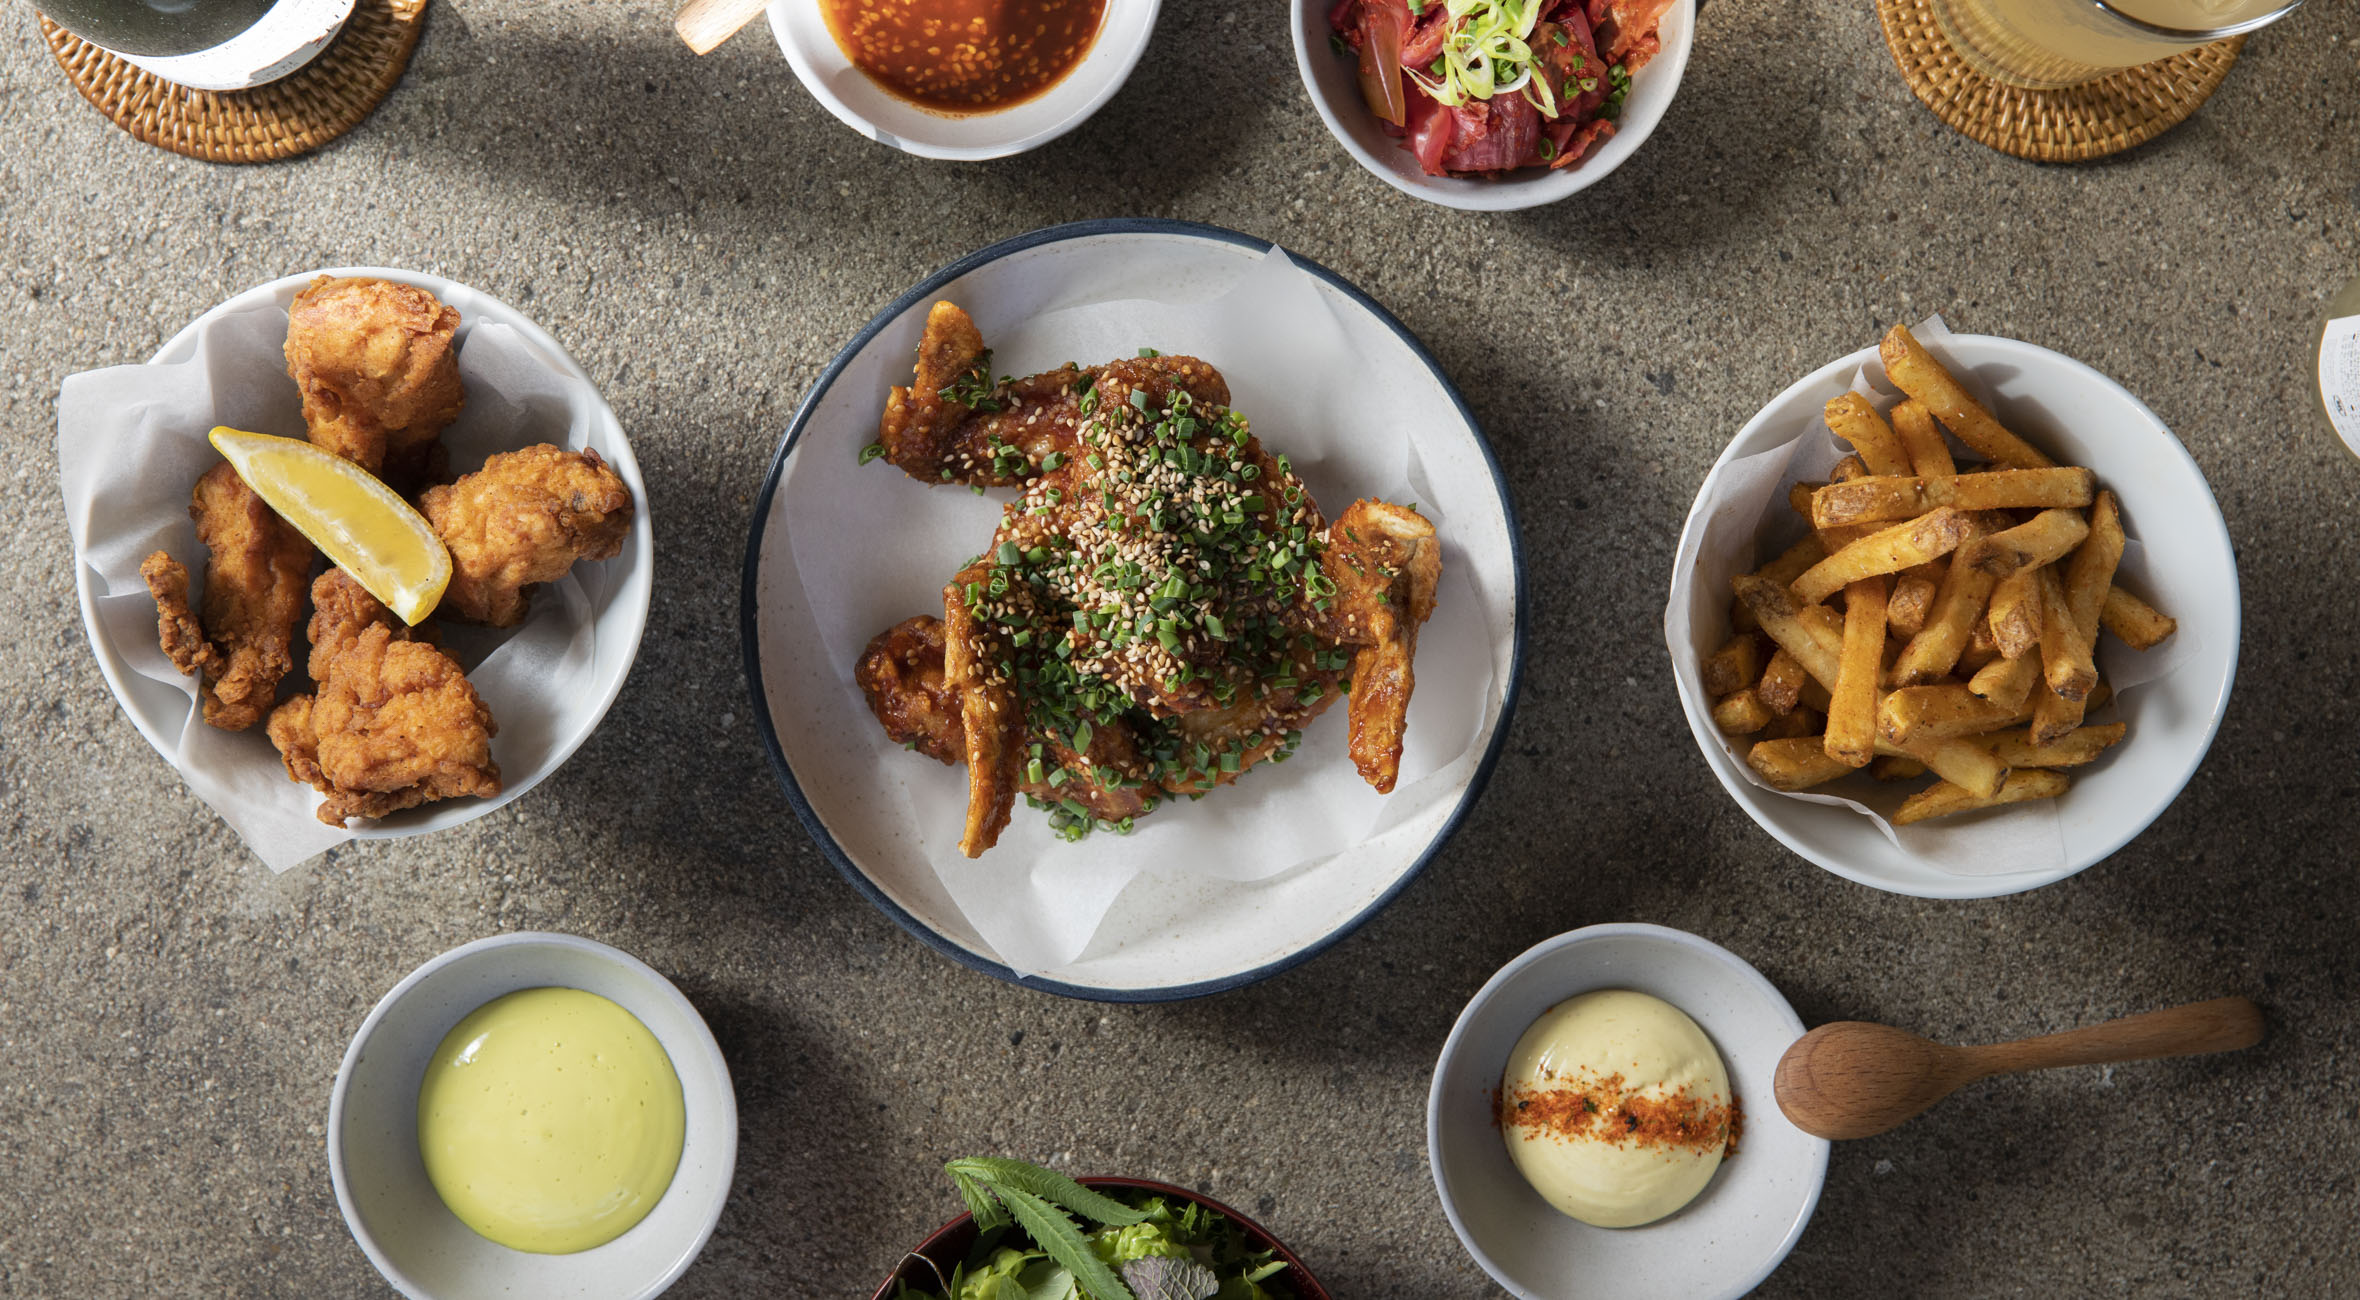 Fried chicken feast hos Kōnā i Carlsberg Byen – Tidligere Noma-kok har åbnet fried chicken counter